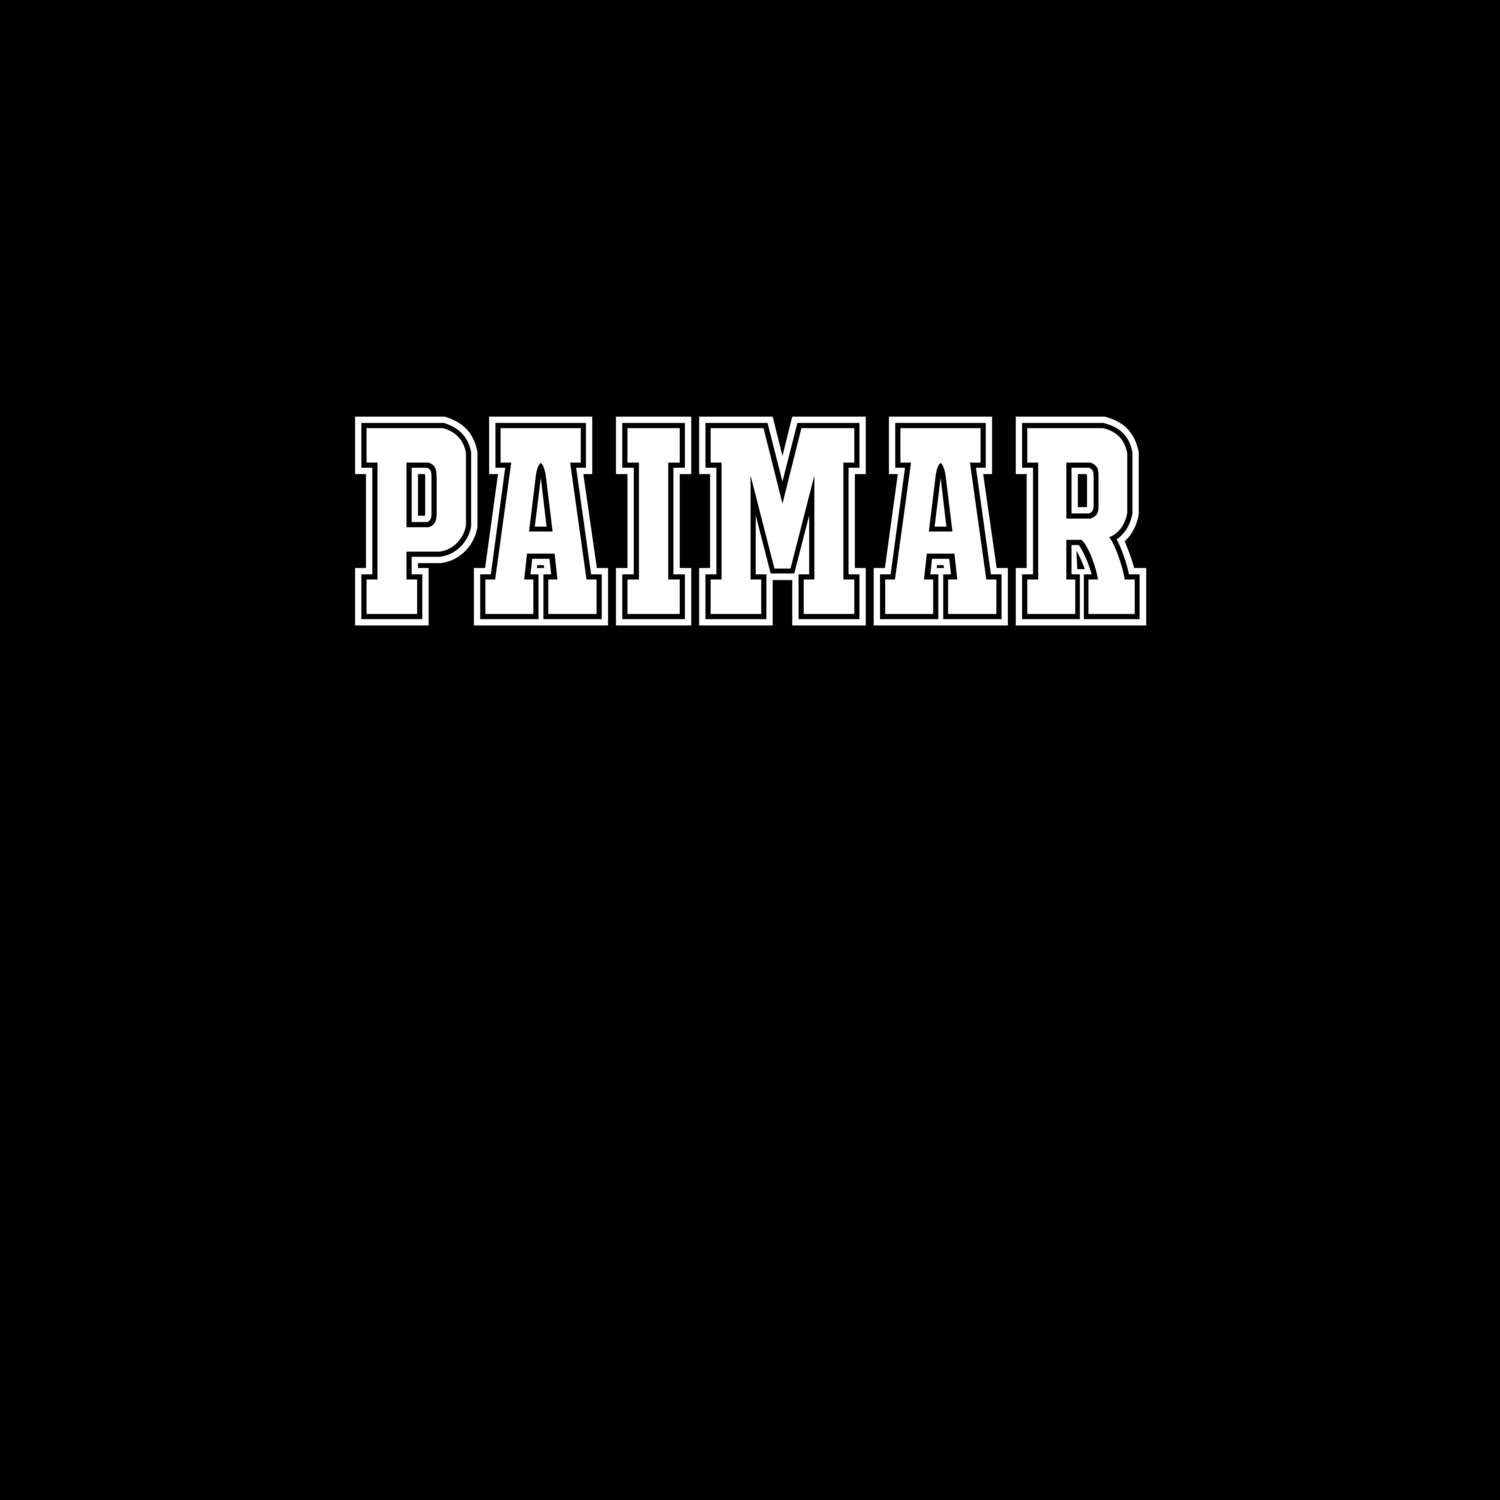 Paimar T-Shirt »Classic«